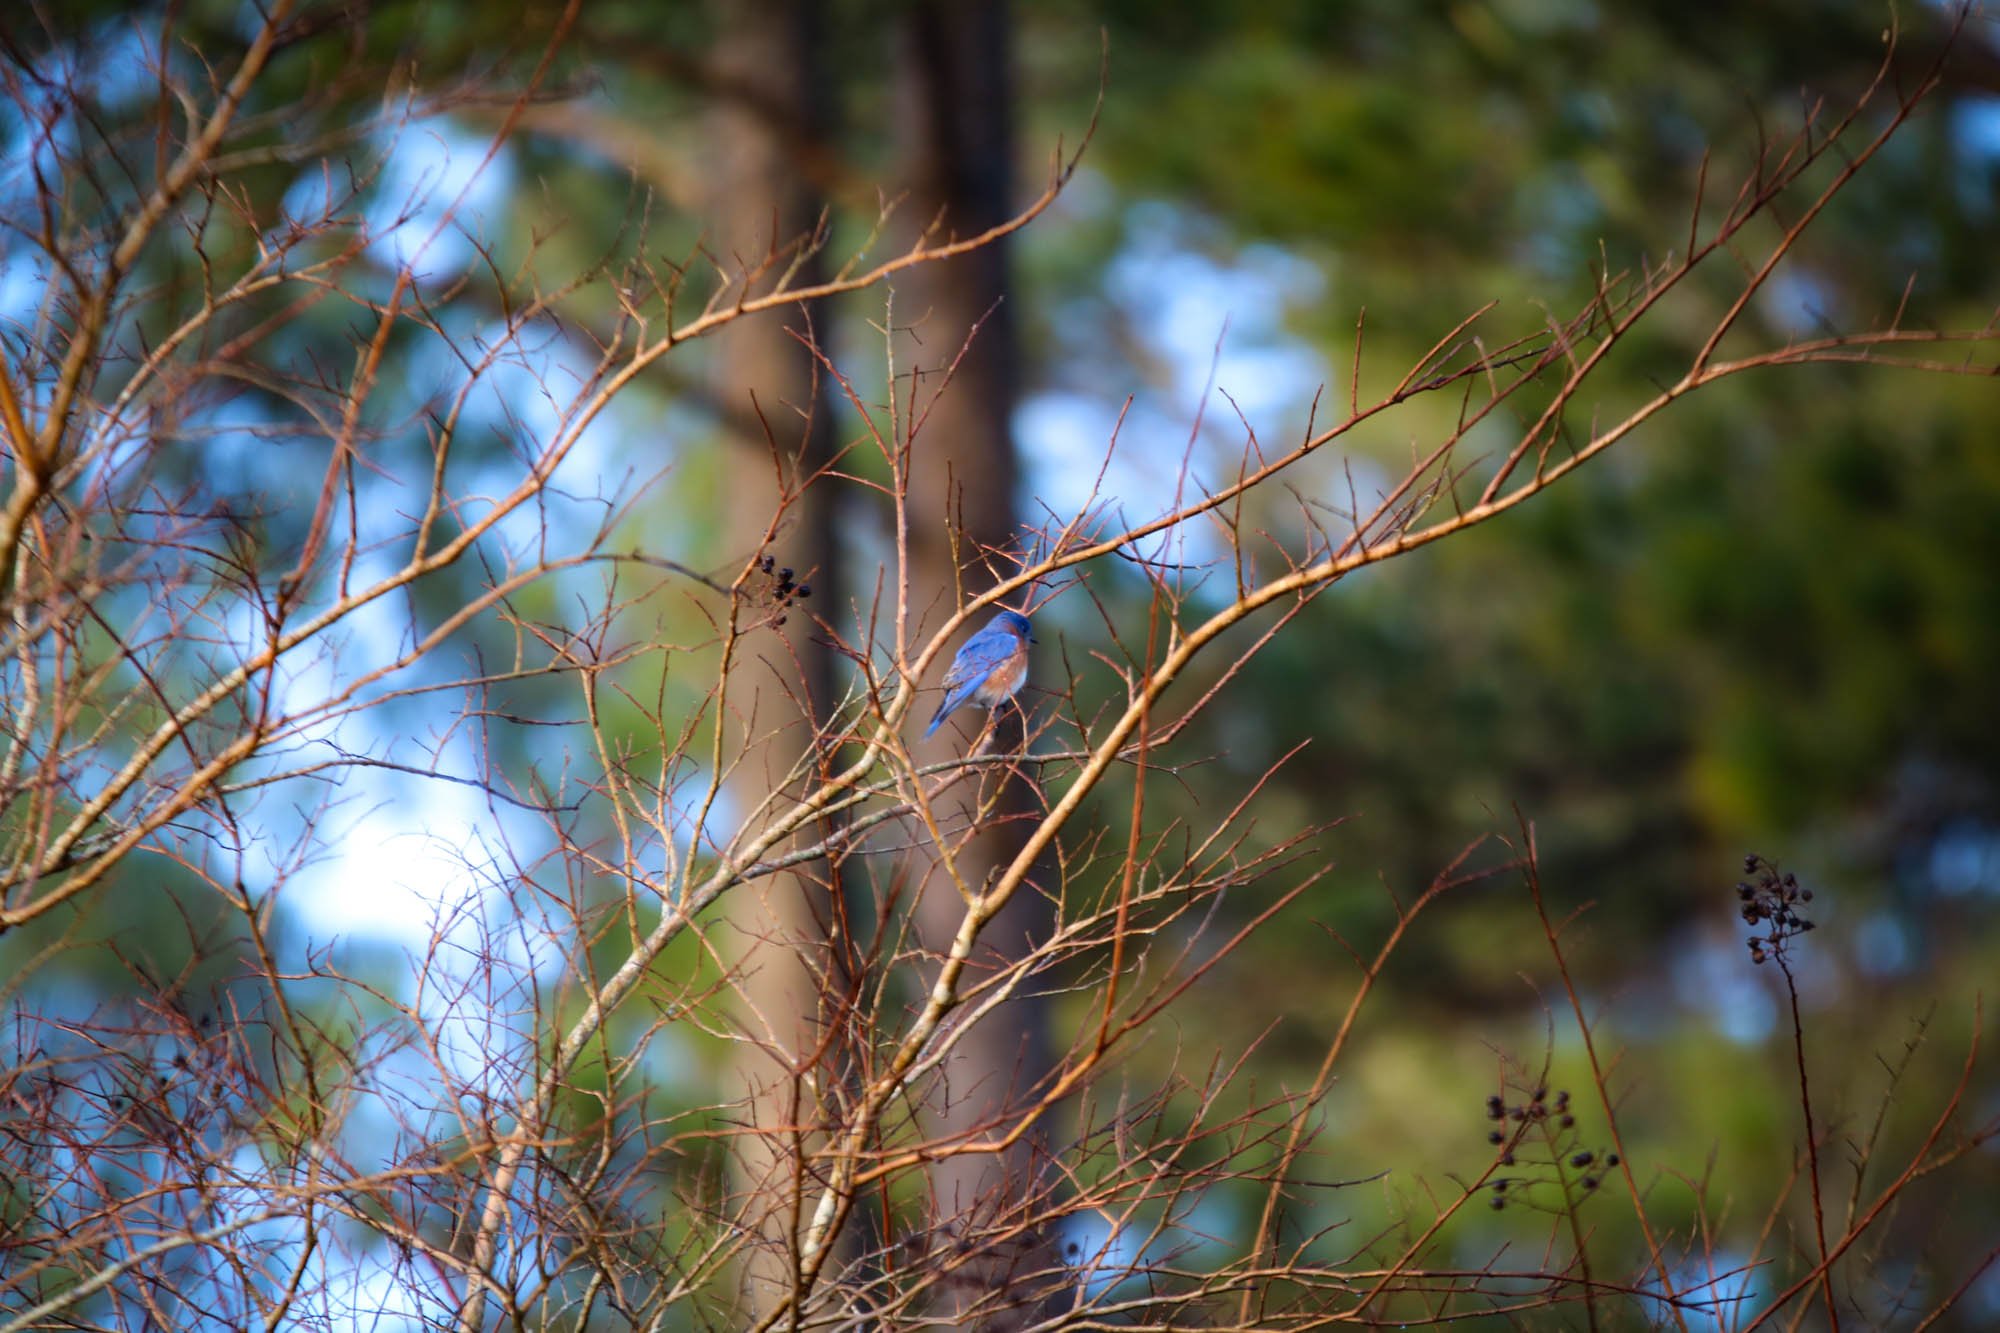 This bluebird is enjoying an elevated perch on an ornamental tree.